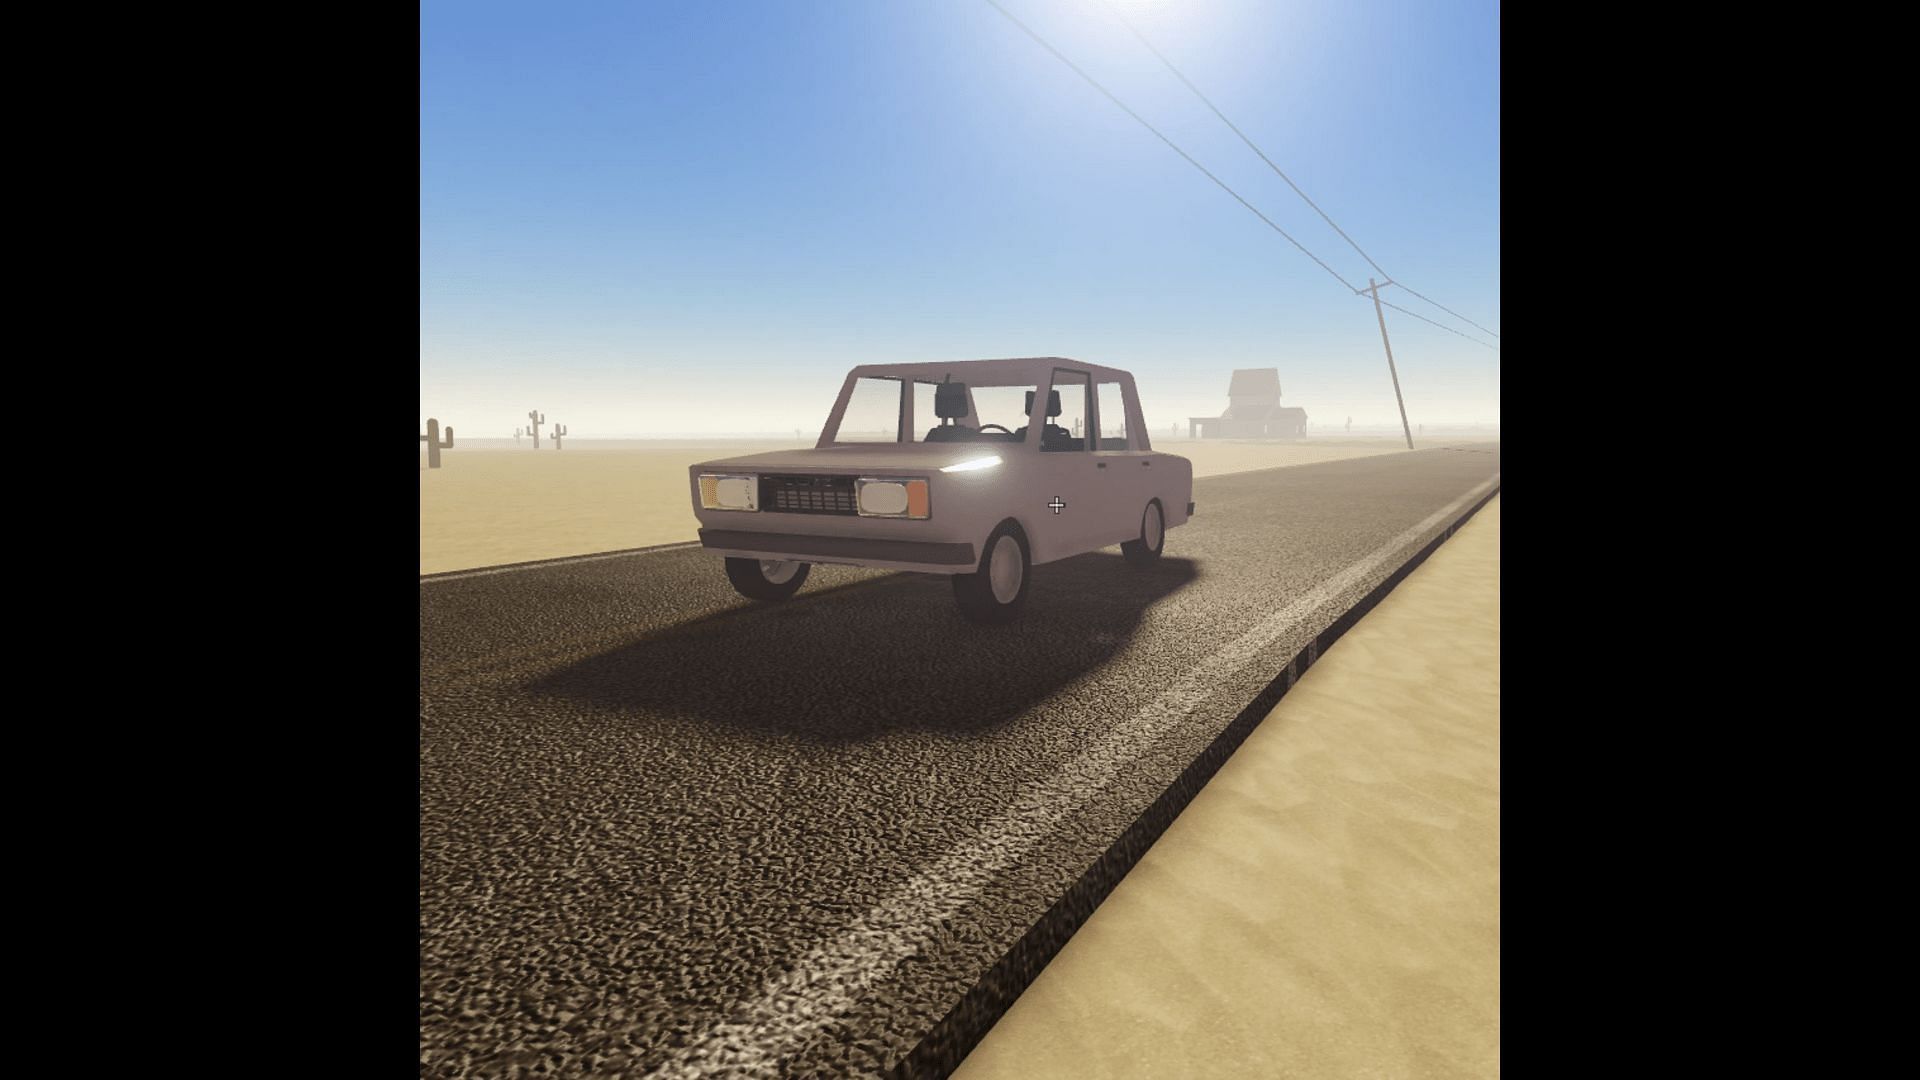 The OG Sedan in A Dusty Trip (Image via Roblox)